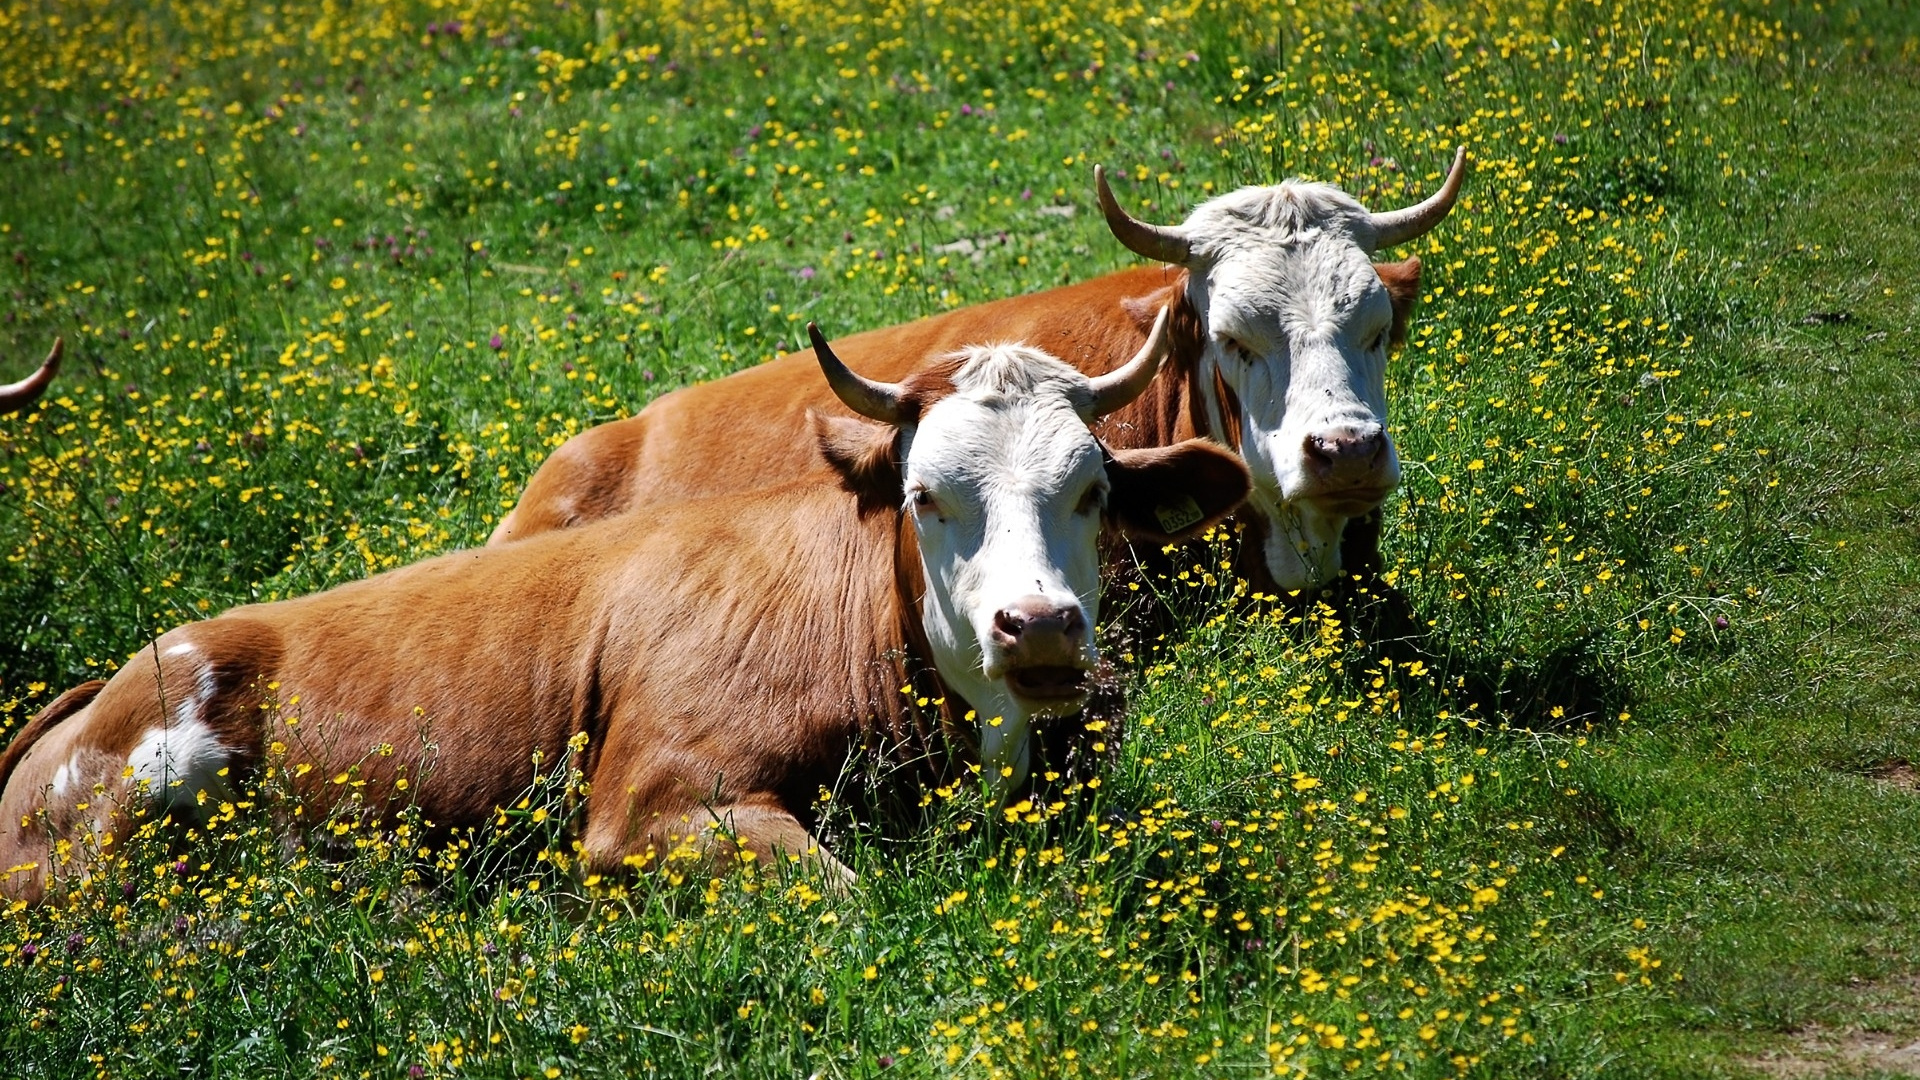 Vache Brune et Blanche Sur Terrain D'herbe Verte Pendant la Journée. Wallpaper in 1920x1080 Resolution